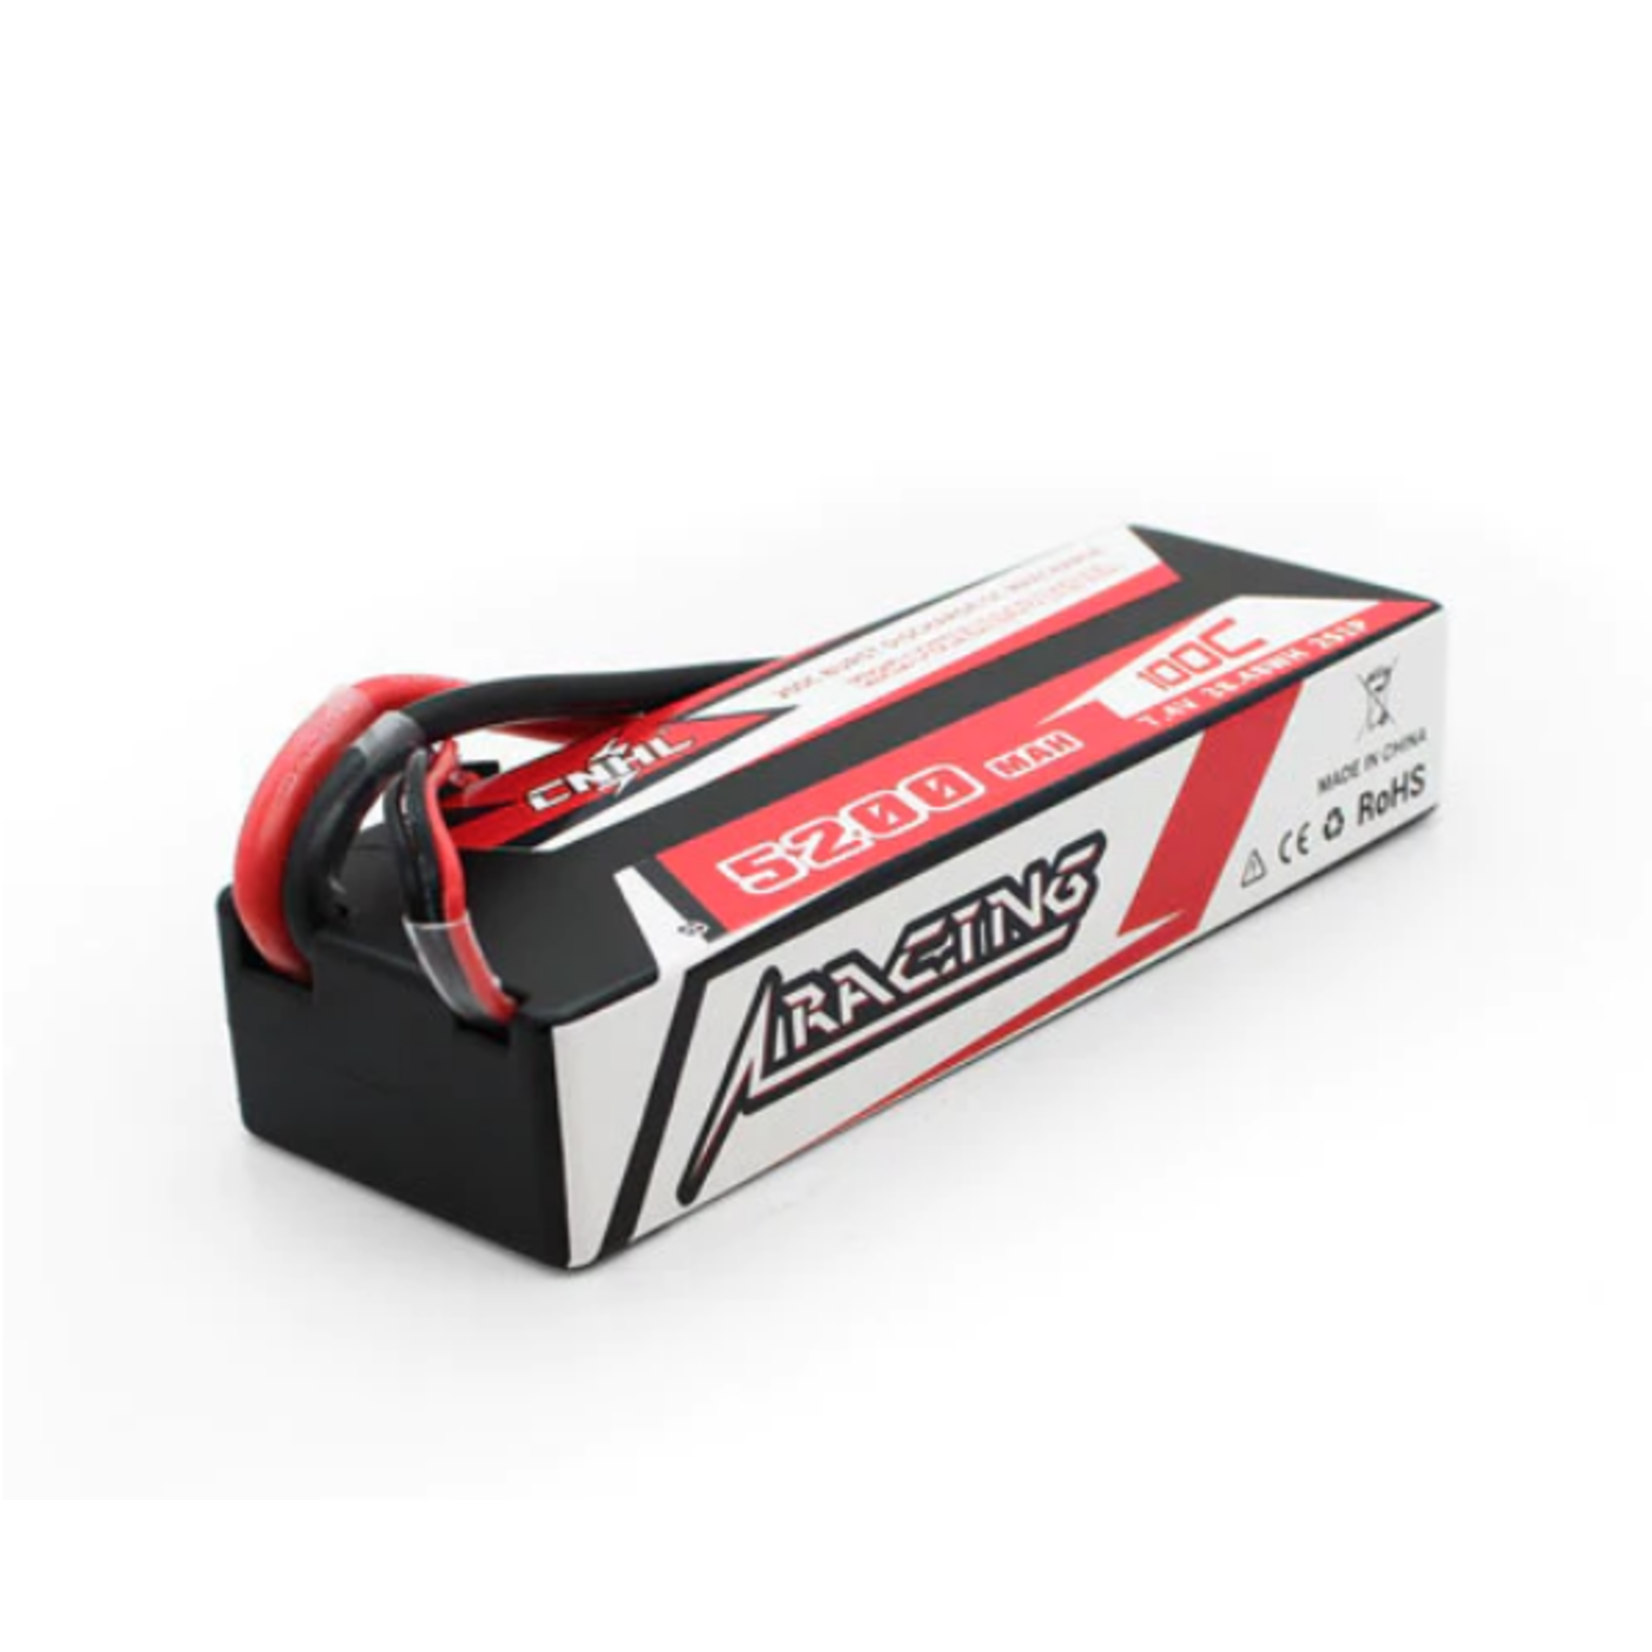 CNHL Racing CNHL Racing Series 5200mAh 7.4V 2S 100C LiPo Battery Hard Case w/Deans Plug #HC5201002